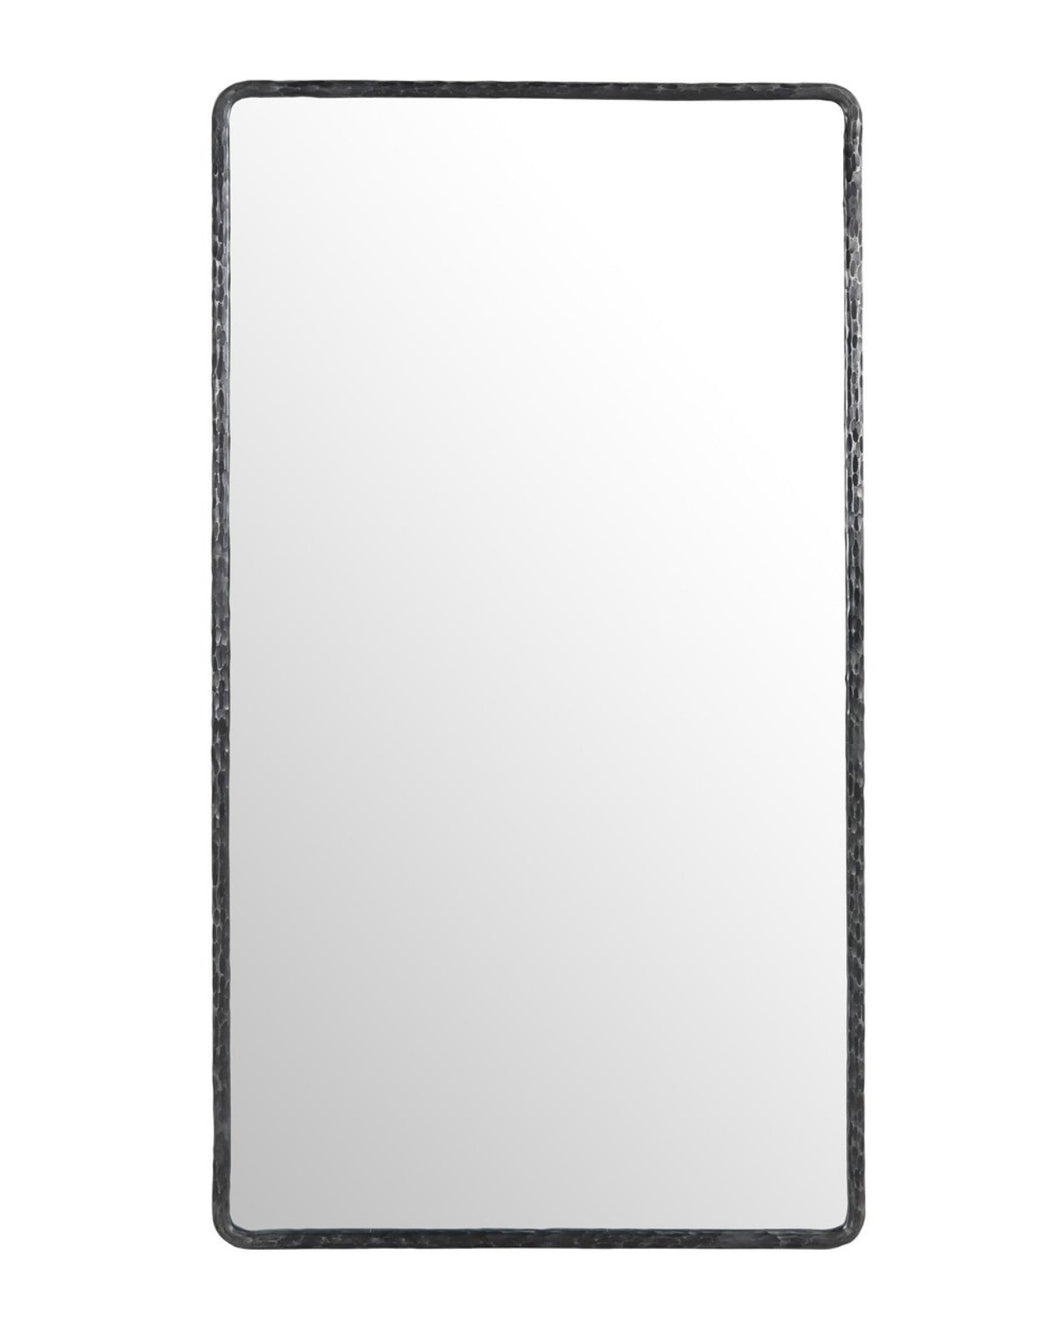 Wrought iron 78” rectangle mirror